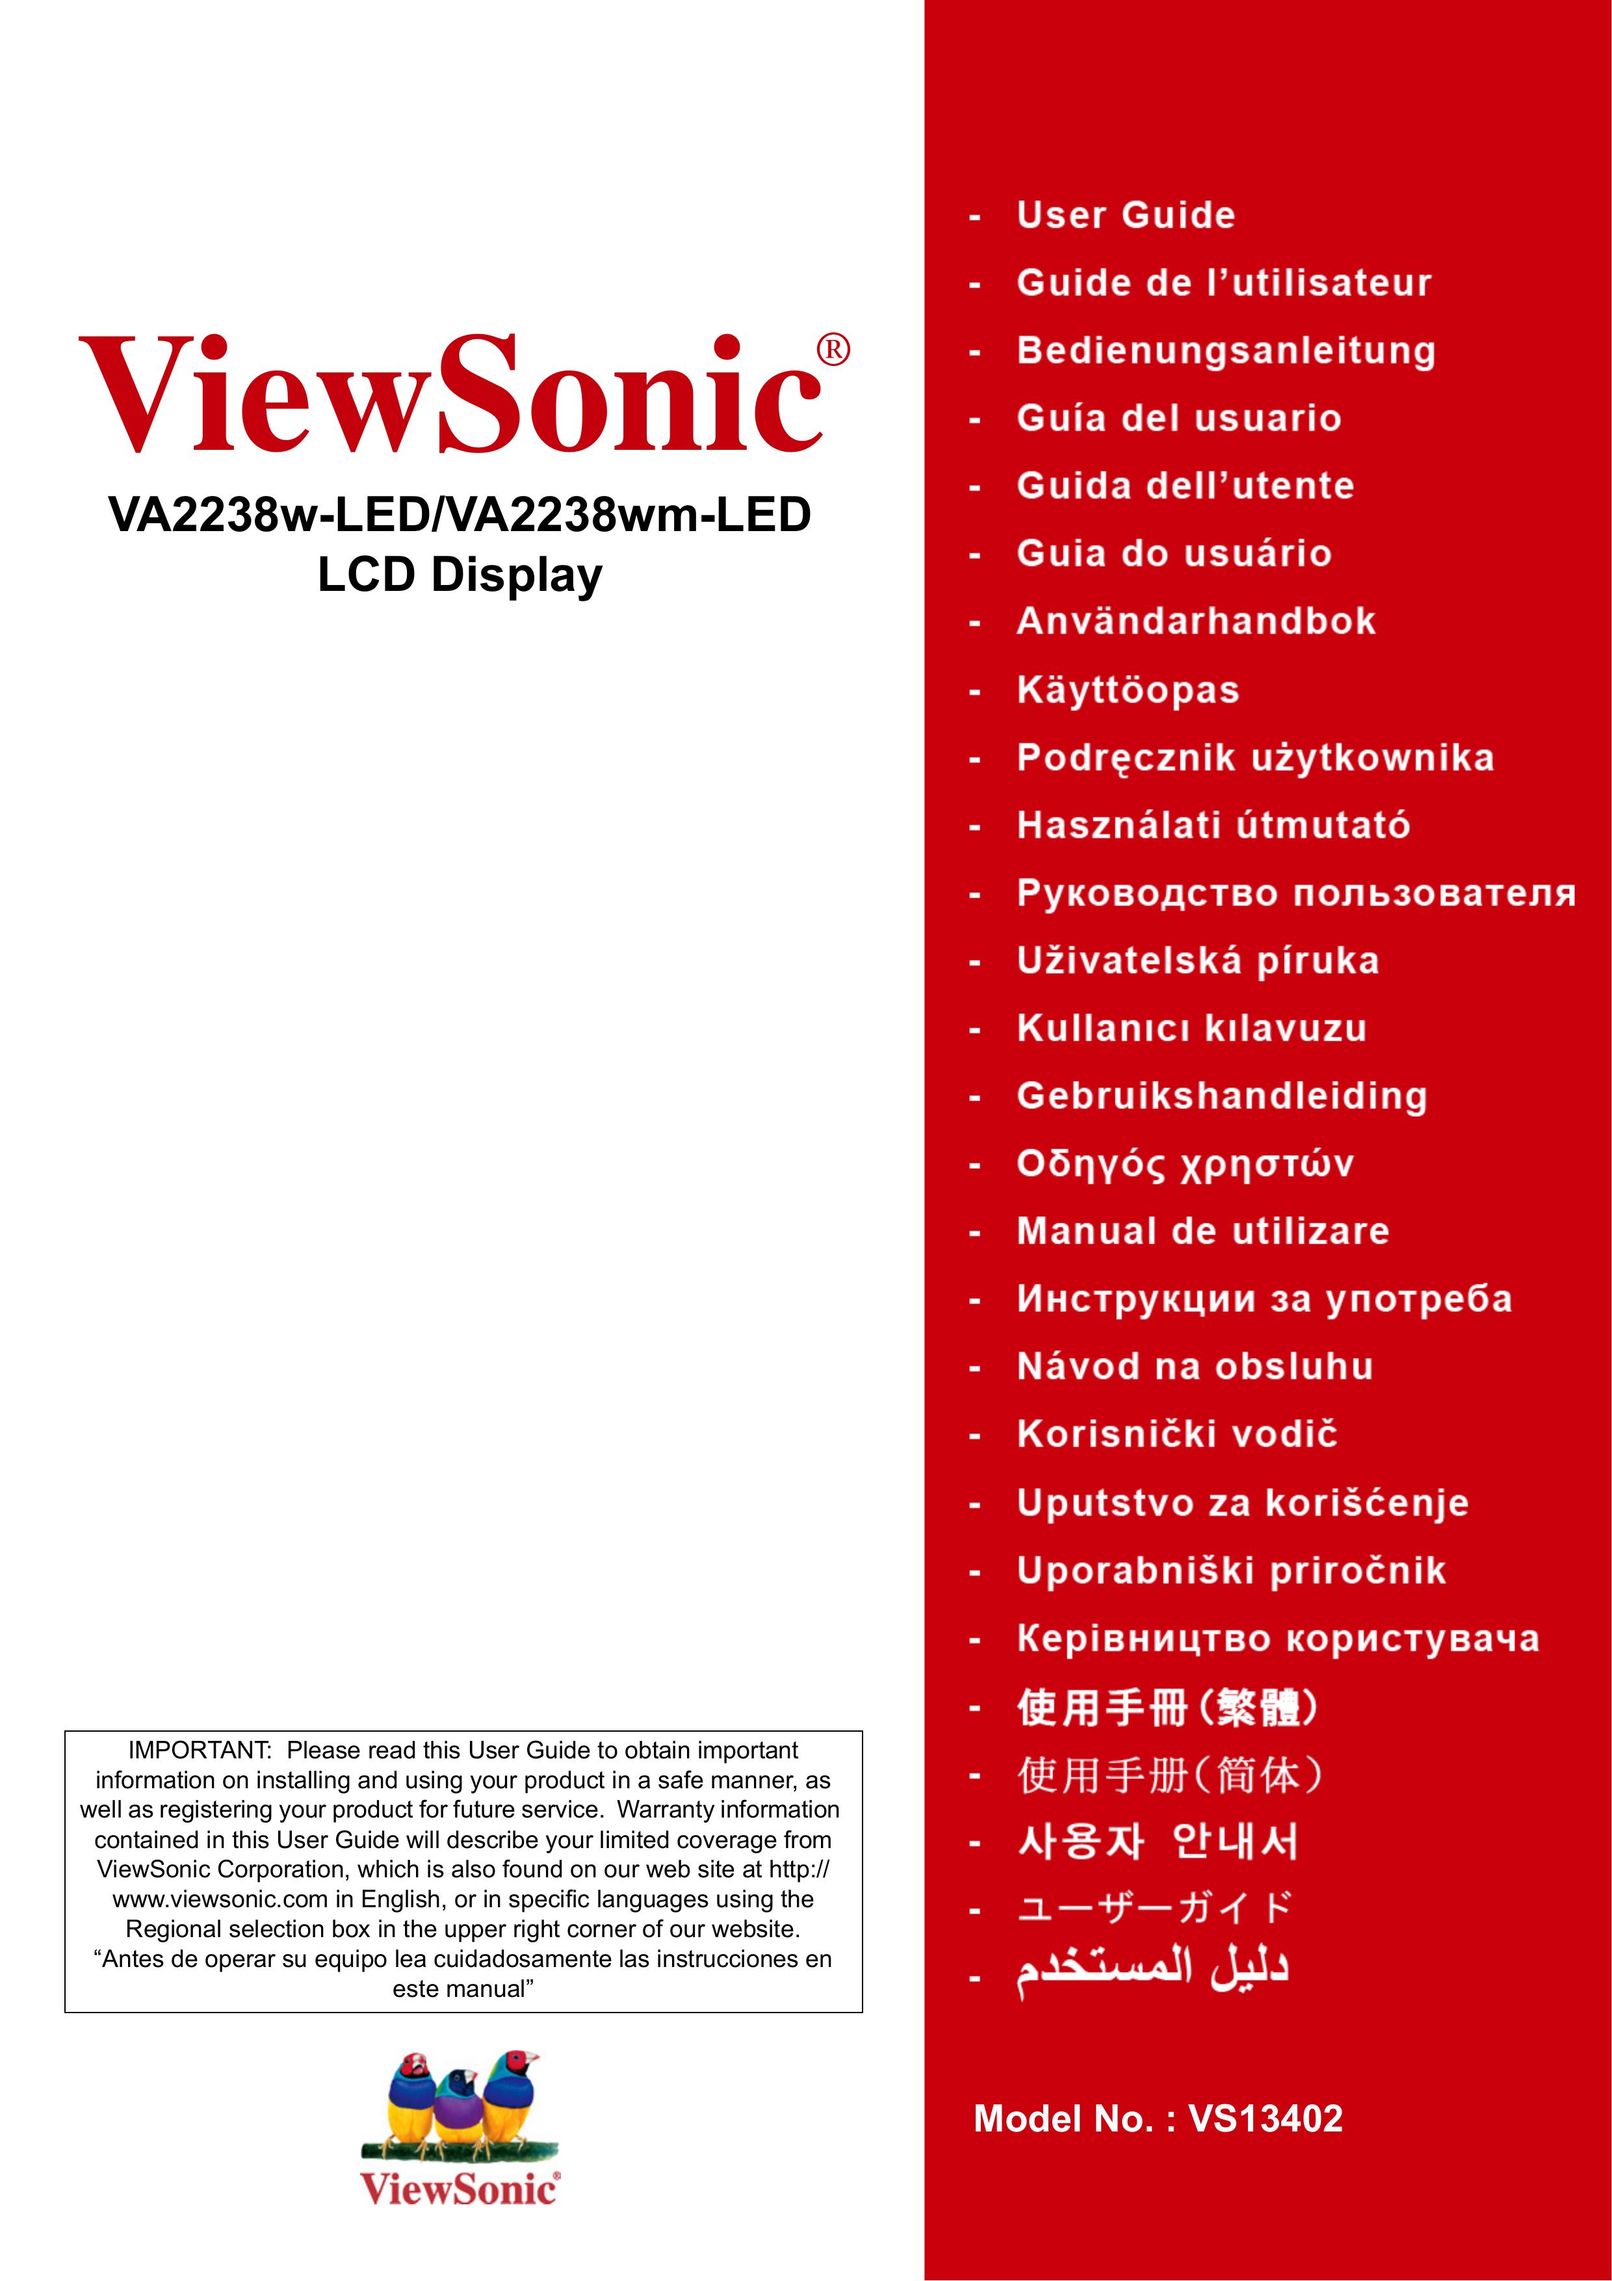 ViewSonic Va2238w-LED/VA2238wm-LED Car Video System User Manual